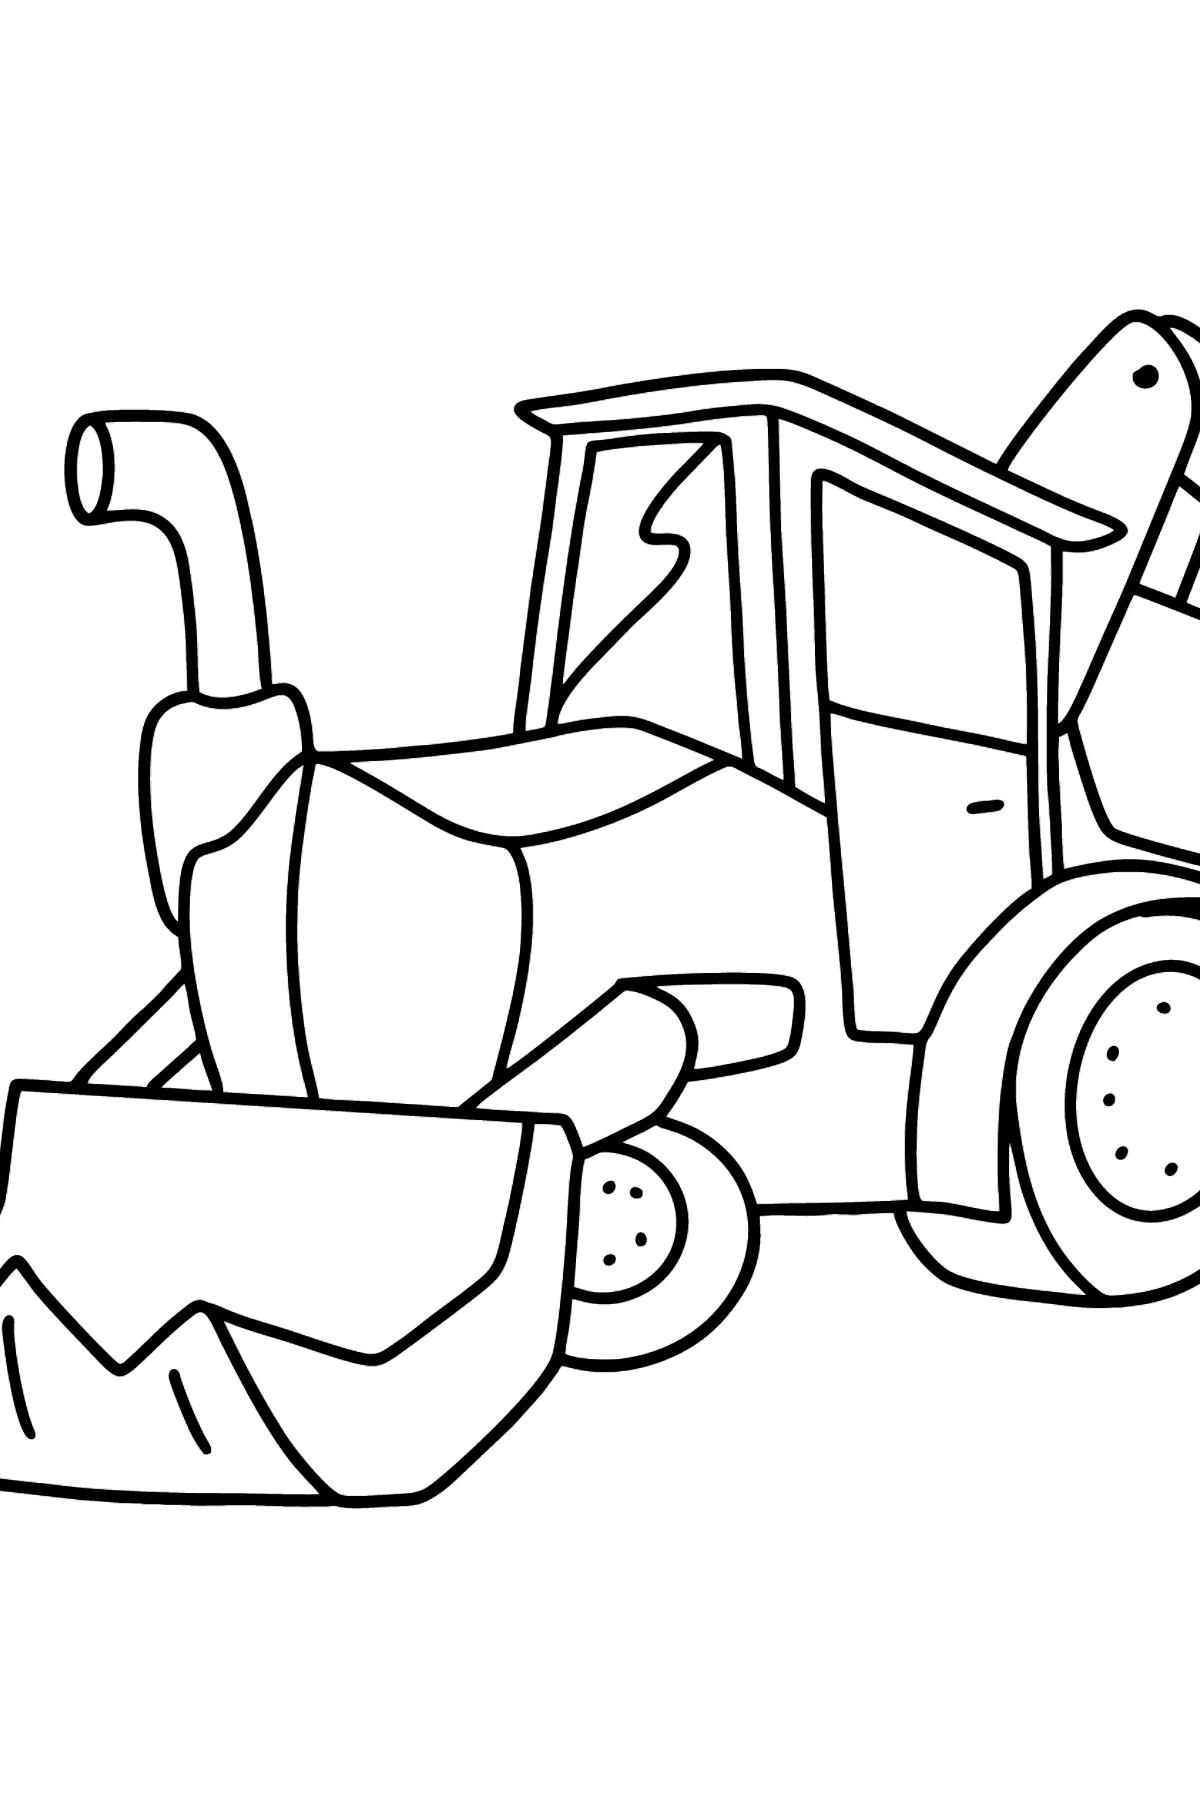 Tegning til fargelegging traktor med to skuffer - Tegninger til fargelegging for barn